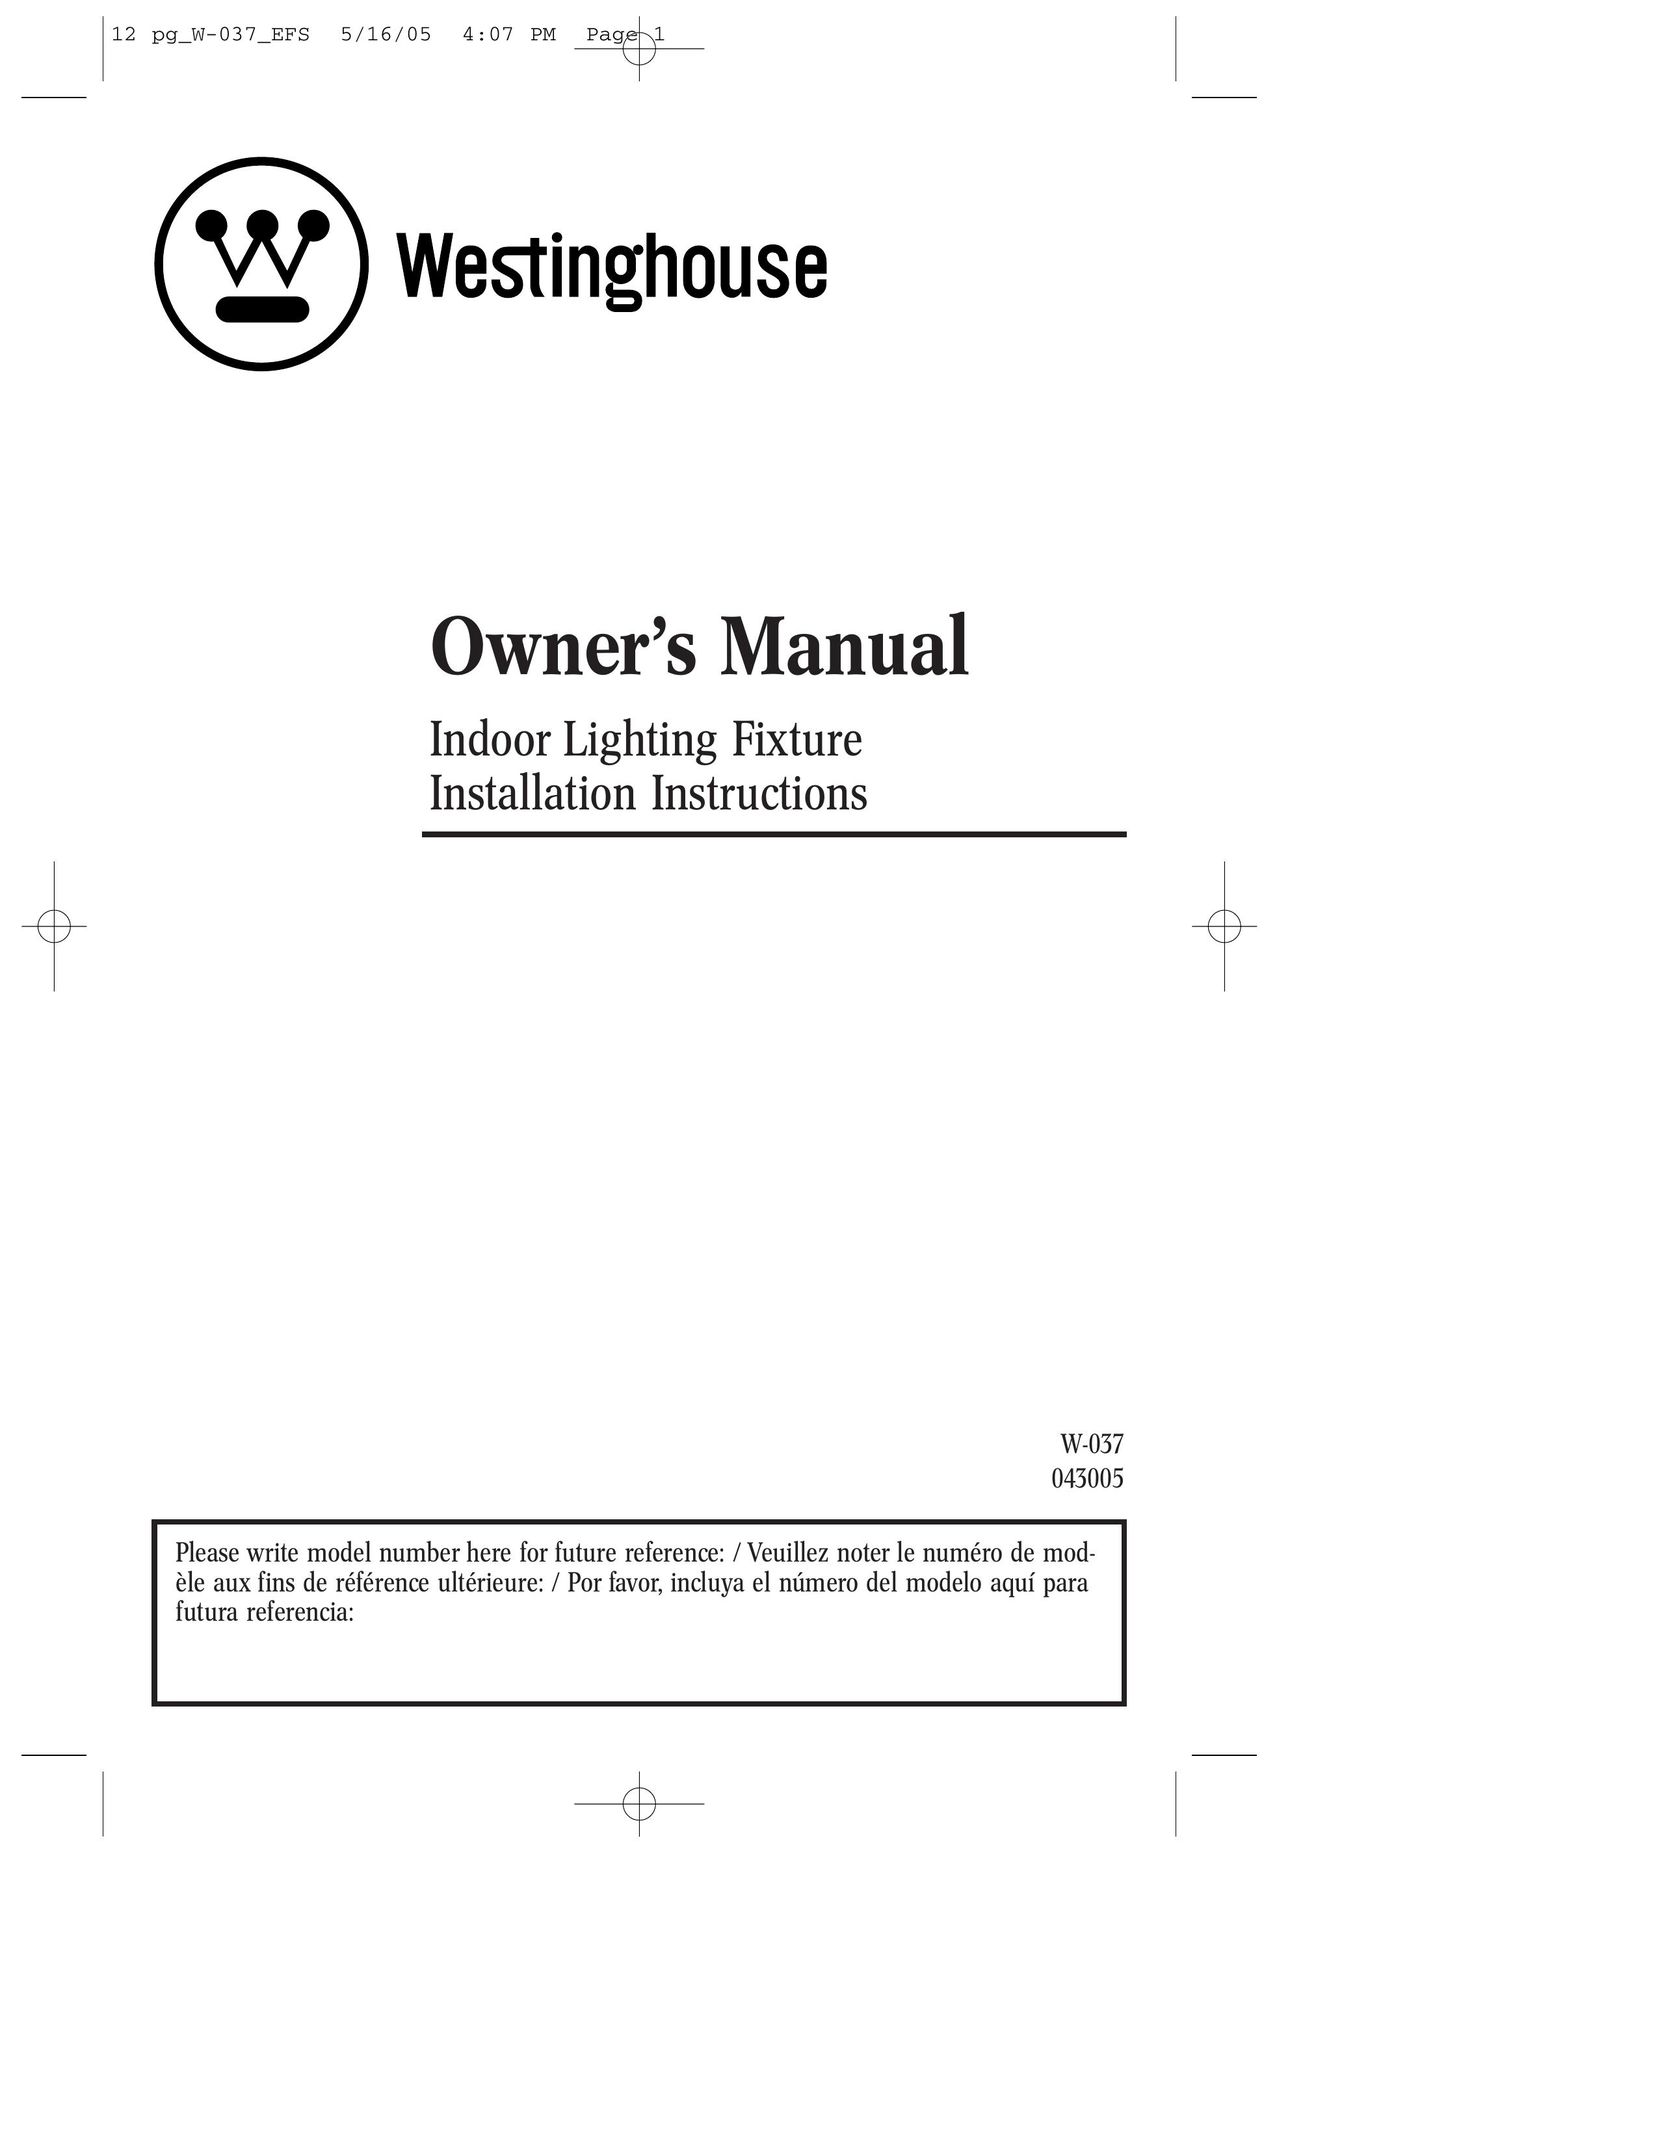 Westinghouse 43005 Indoor Furnishings User Manual